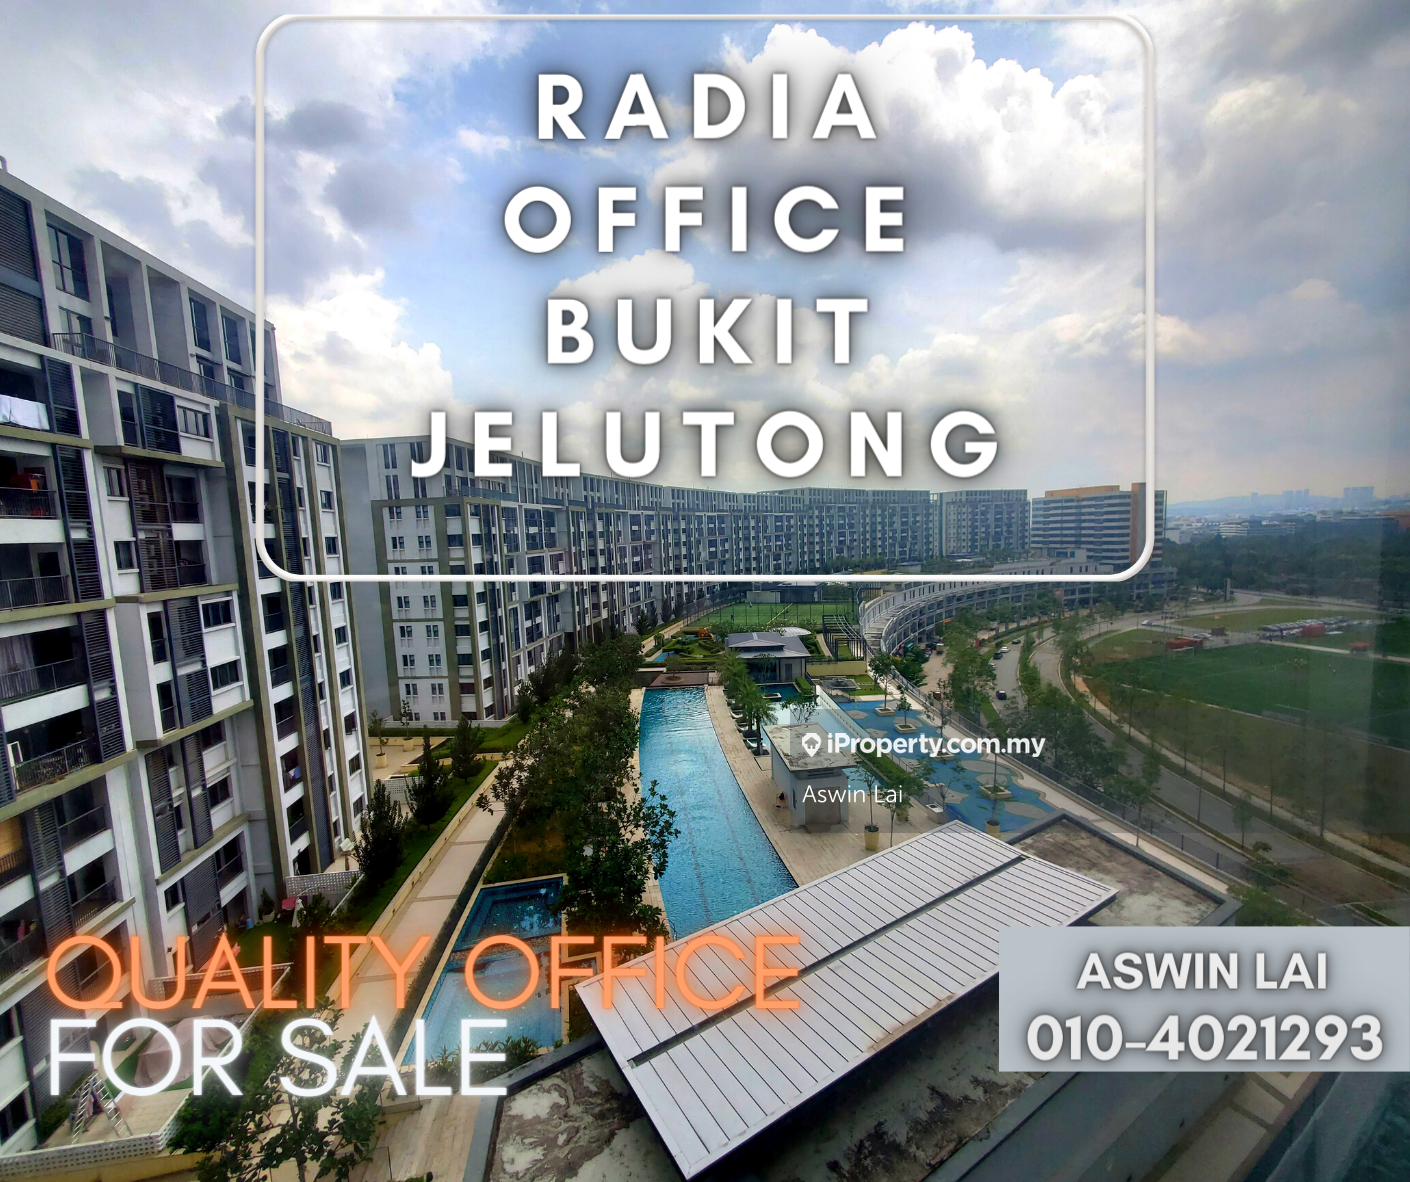 RADIA OFFICE @ Bukit Jelutong, Shah Alam, Radia, Bukit Jelutong